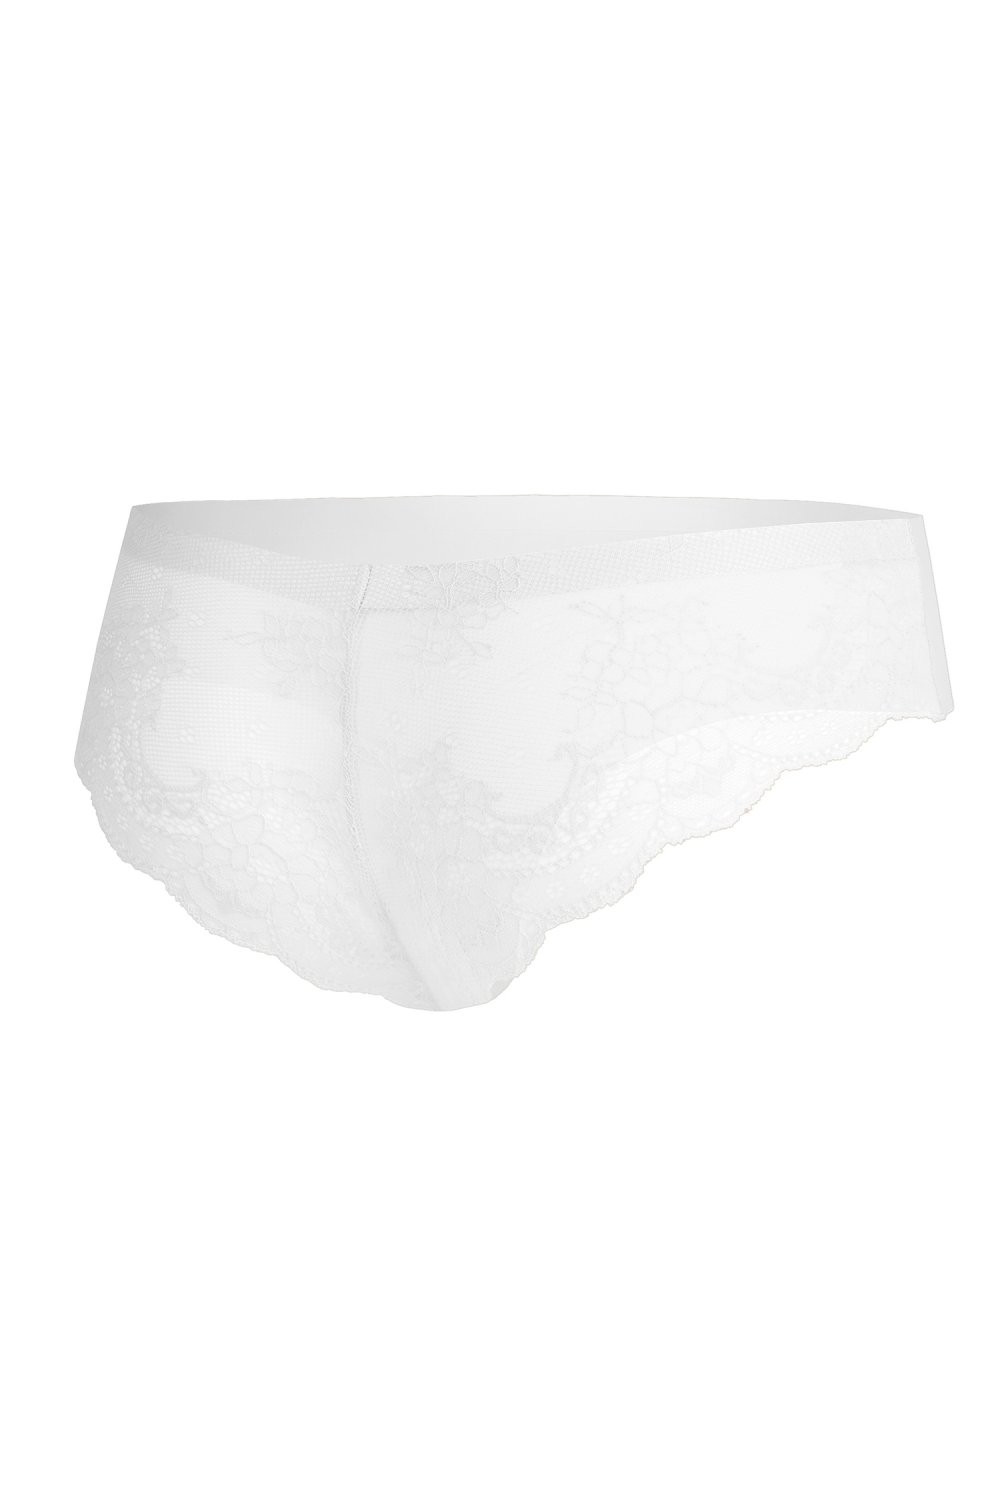 Dámské kalhotky Tanga white - JULIMEX Bílá M